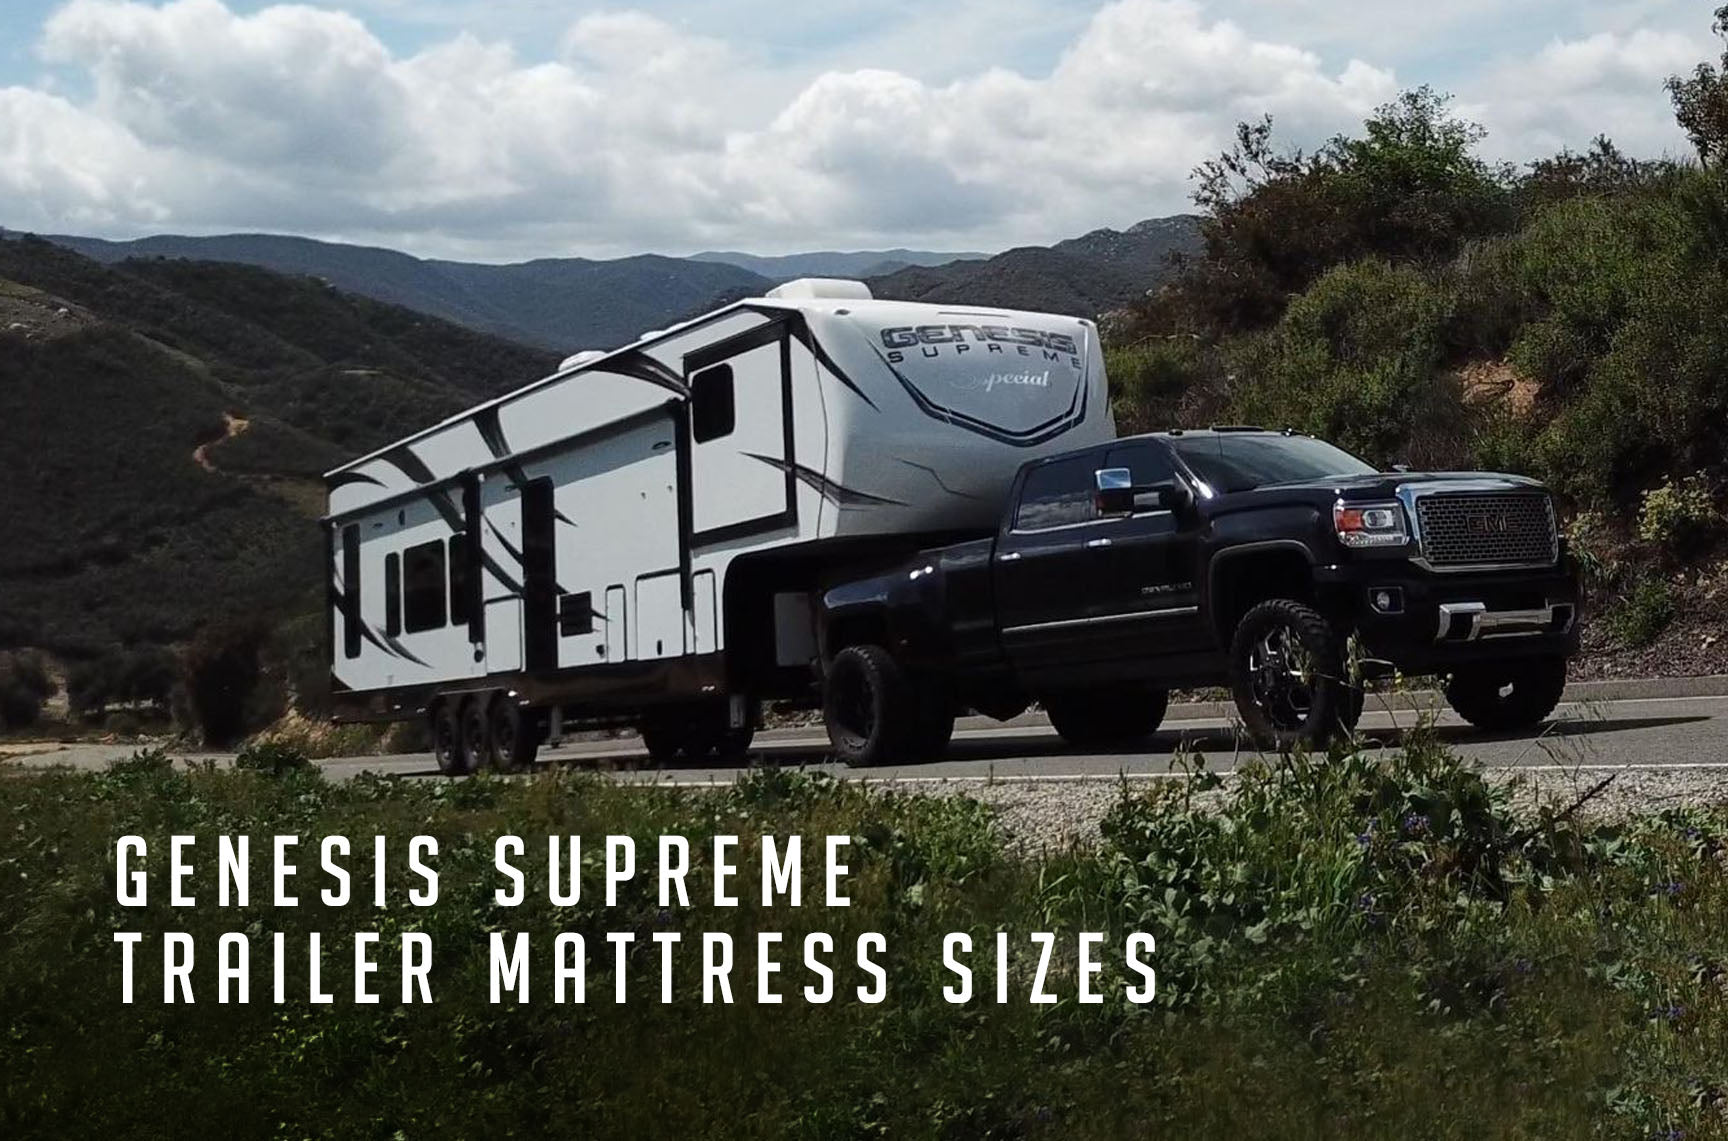 Genesis trailer Mattress sizes